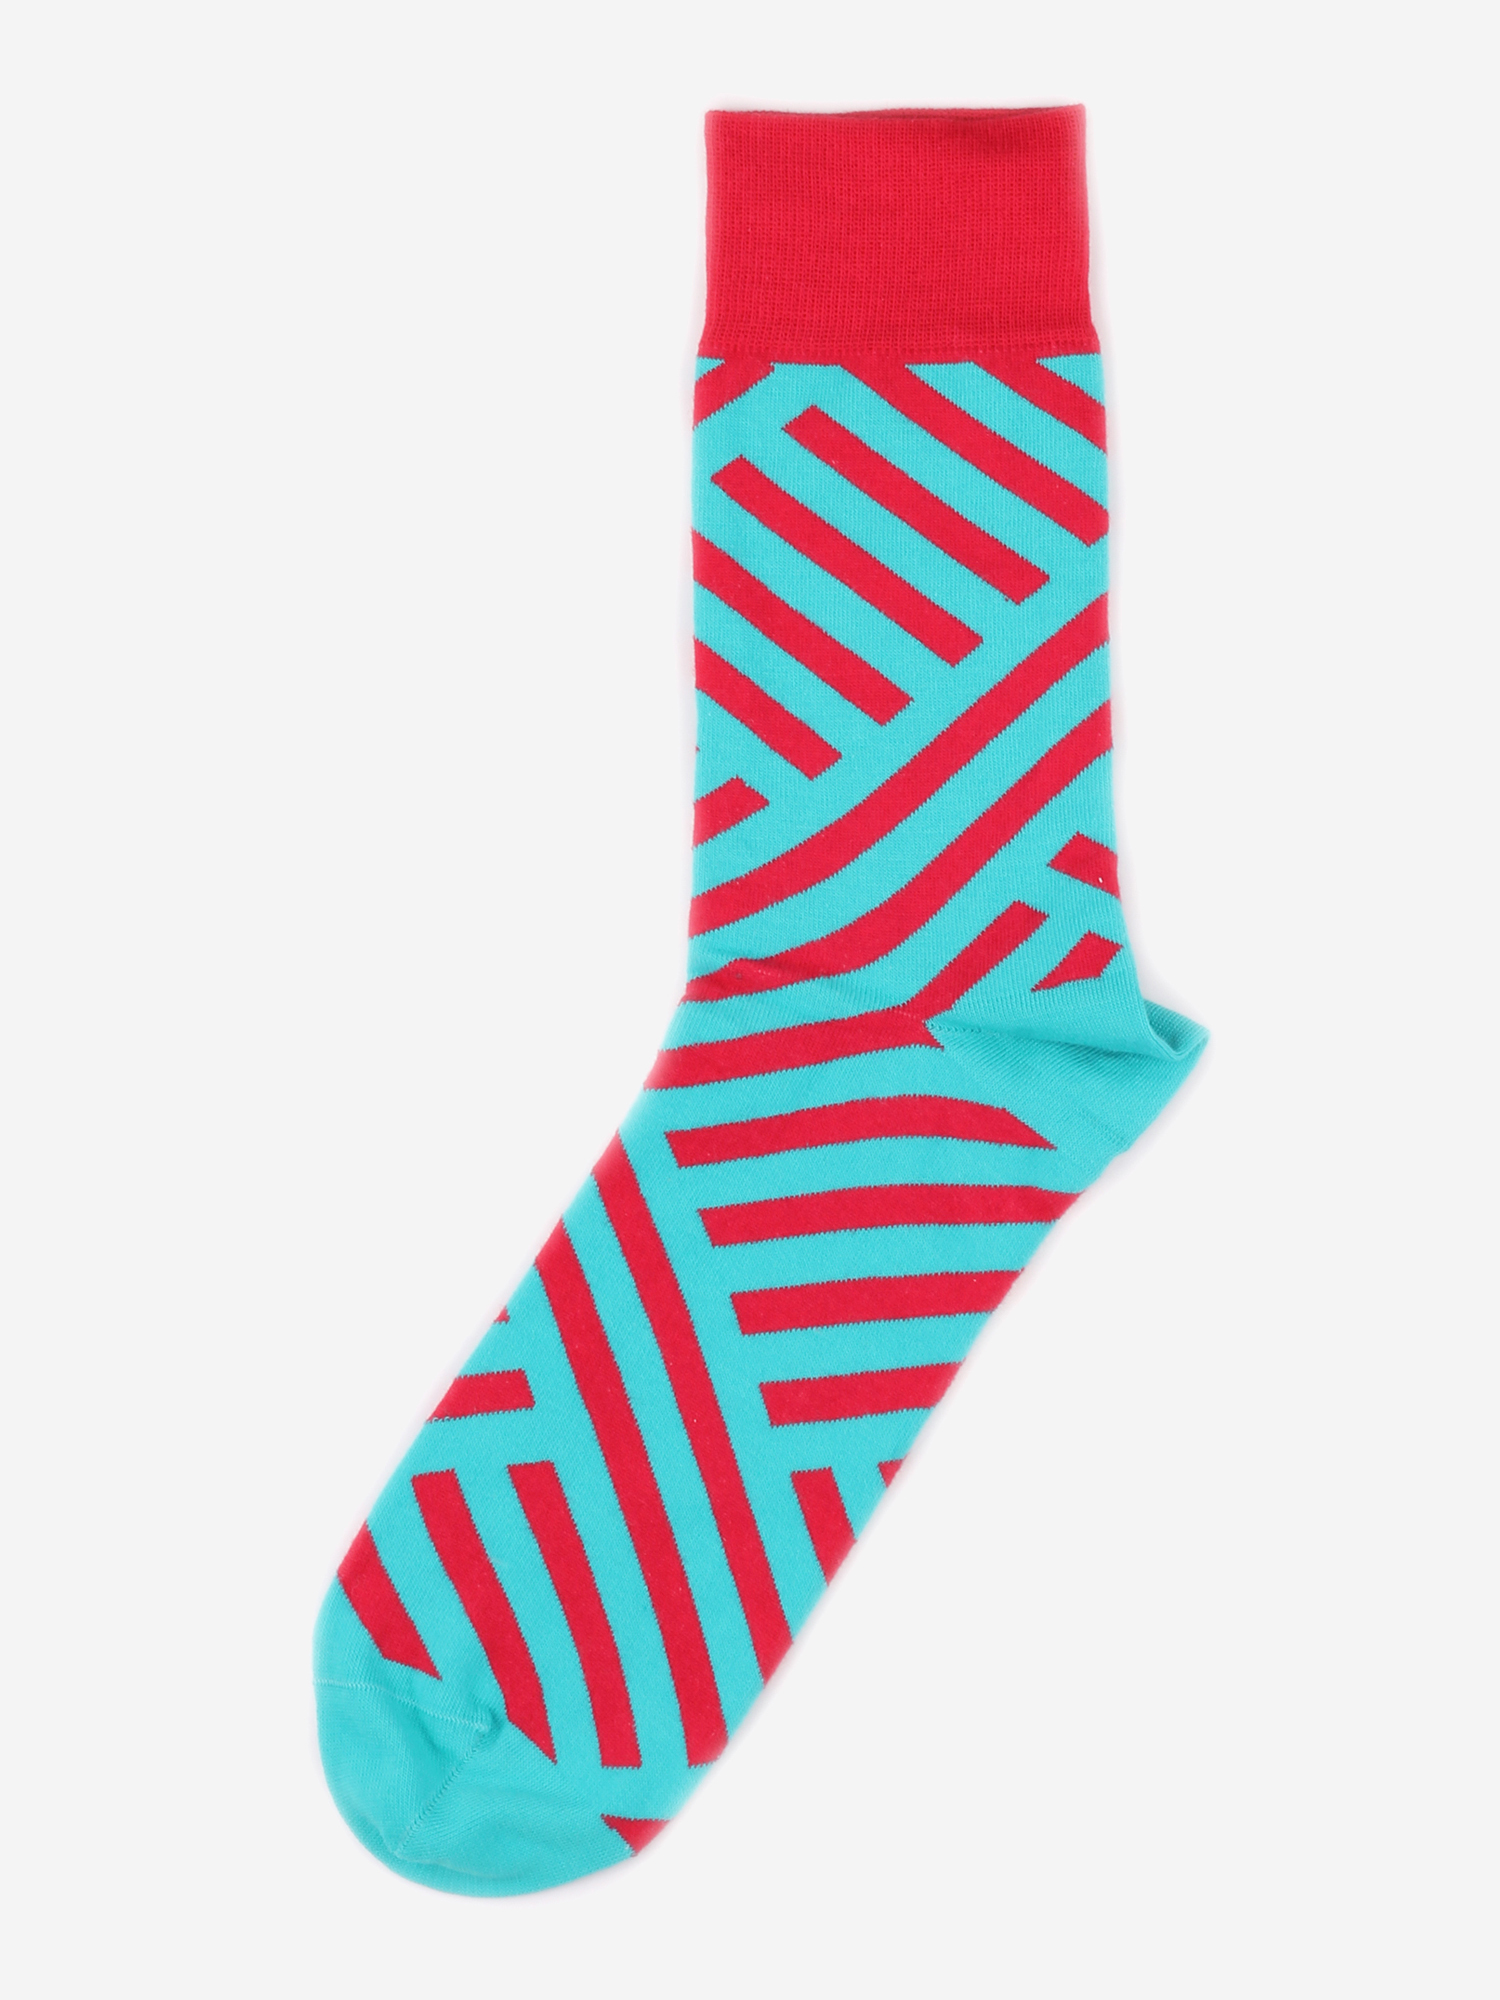 Дизайнерские носки Burning Heels - Diagonal Stripes - Red/Blue, Синий носки с пчёлами burning heels bees red blue синий